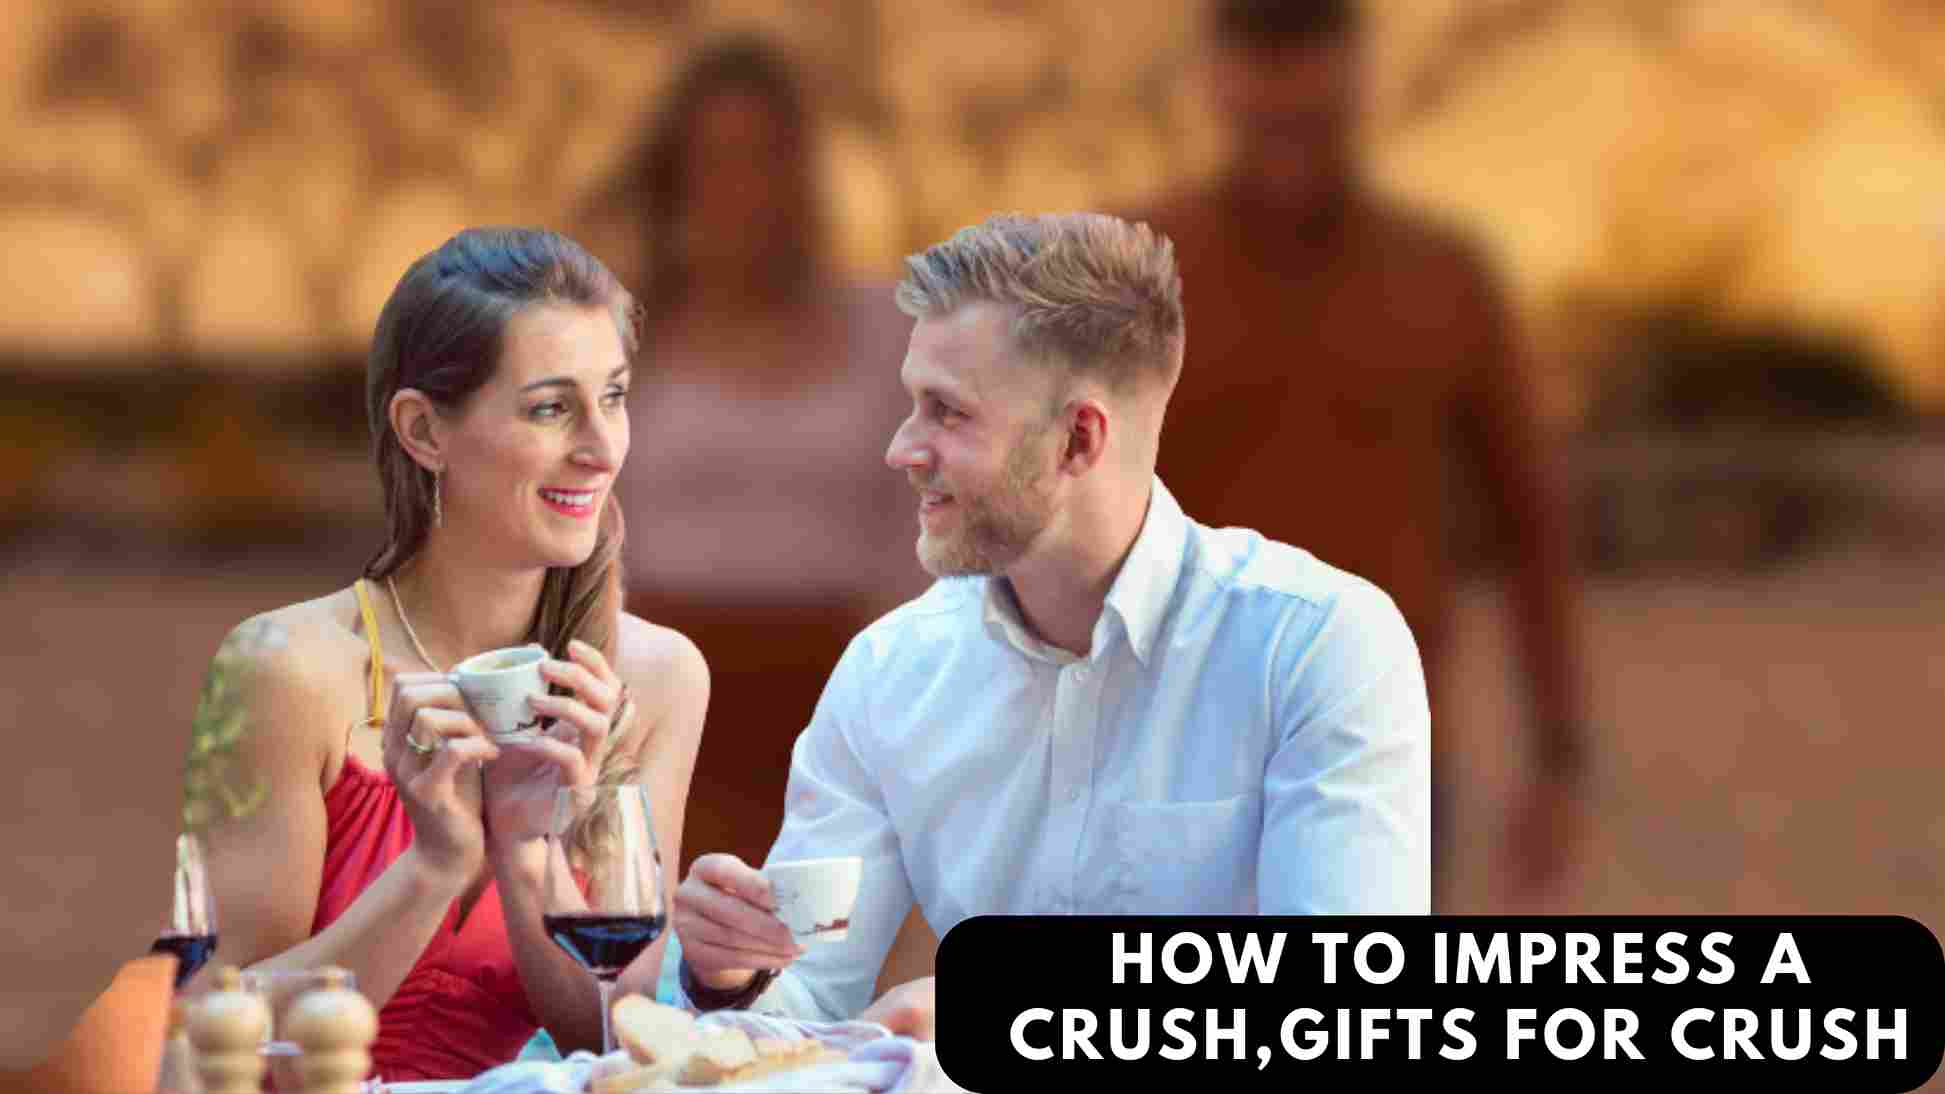 How to Impress crush